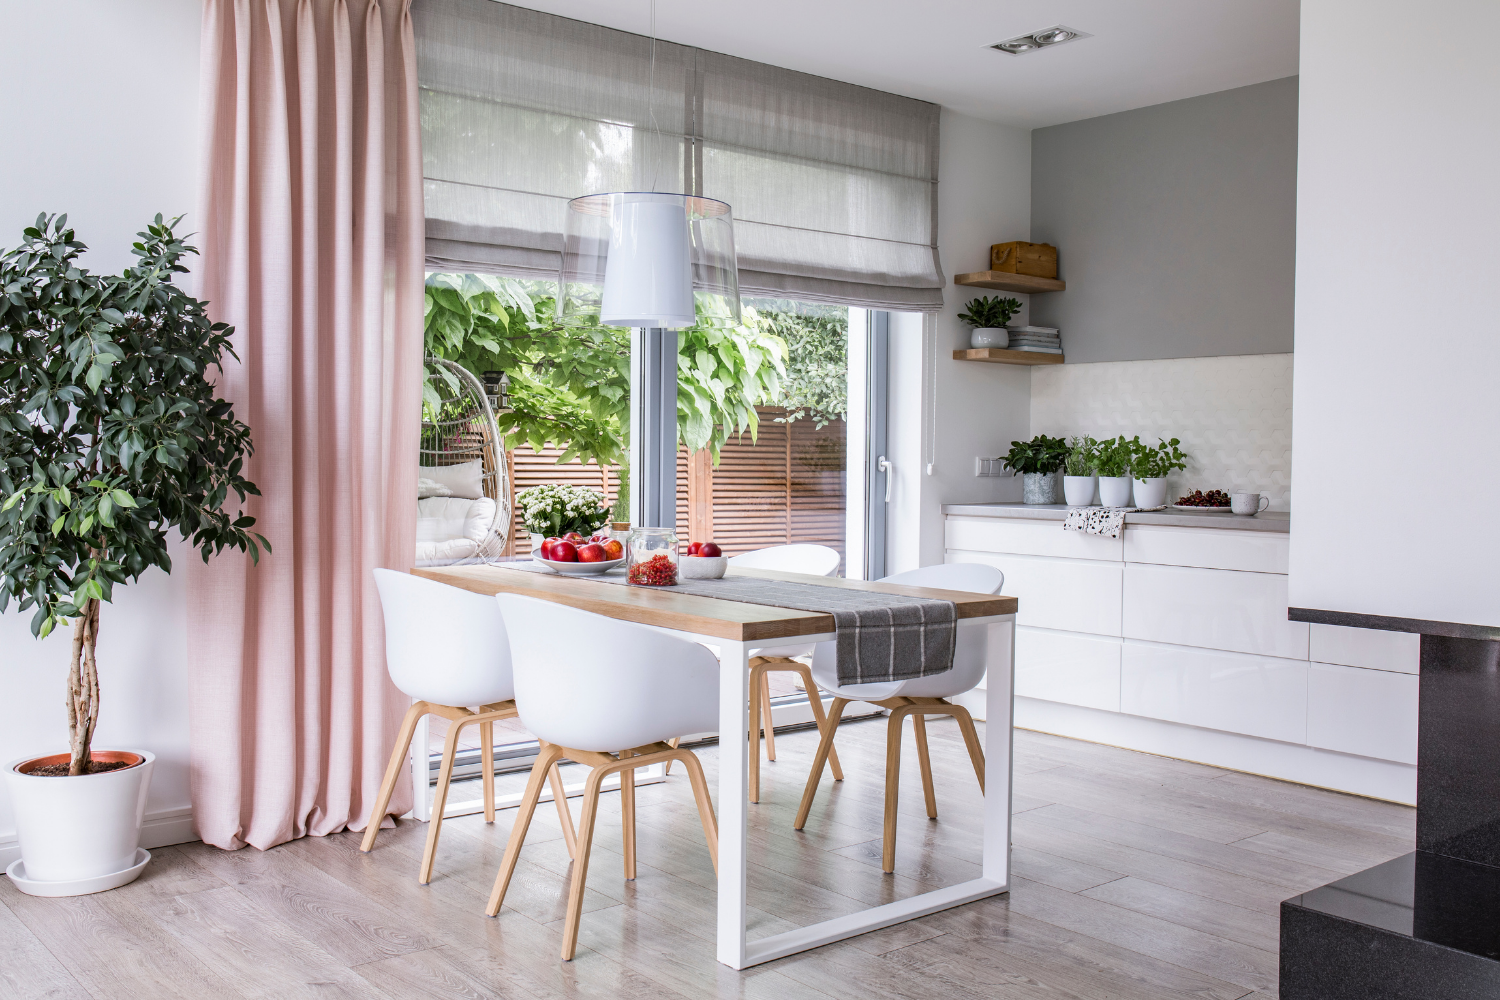 adrienne-morgan-interior-design-dallas-tx-modern-window-treatments-roman-shades-and-drapes-combo-in-large-floor-to-ceilinig-window